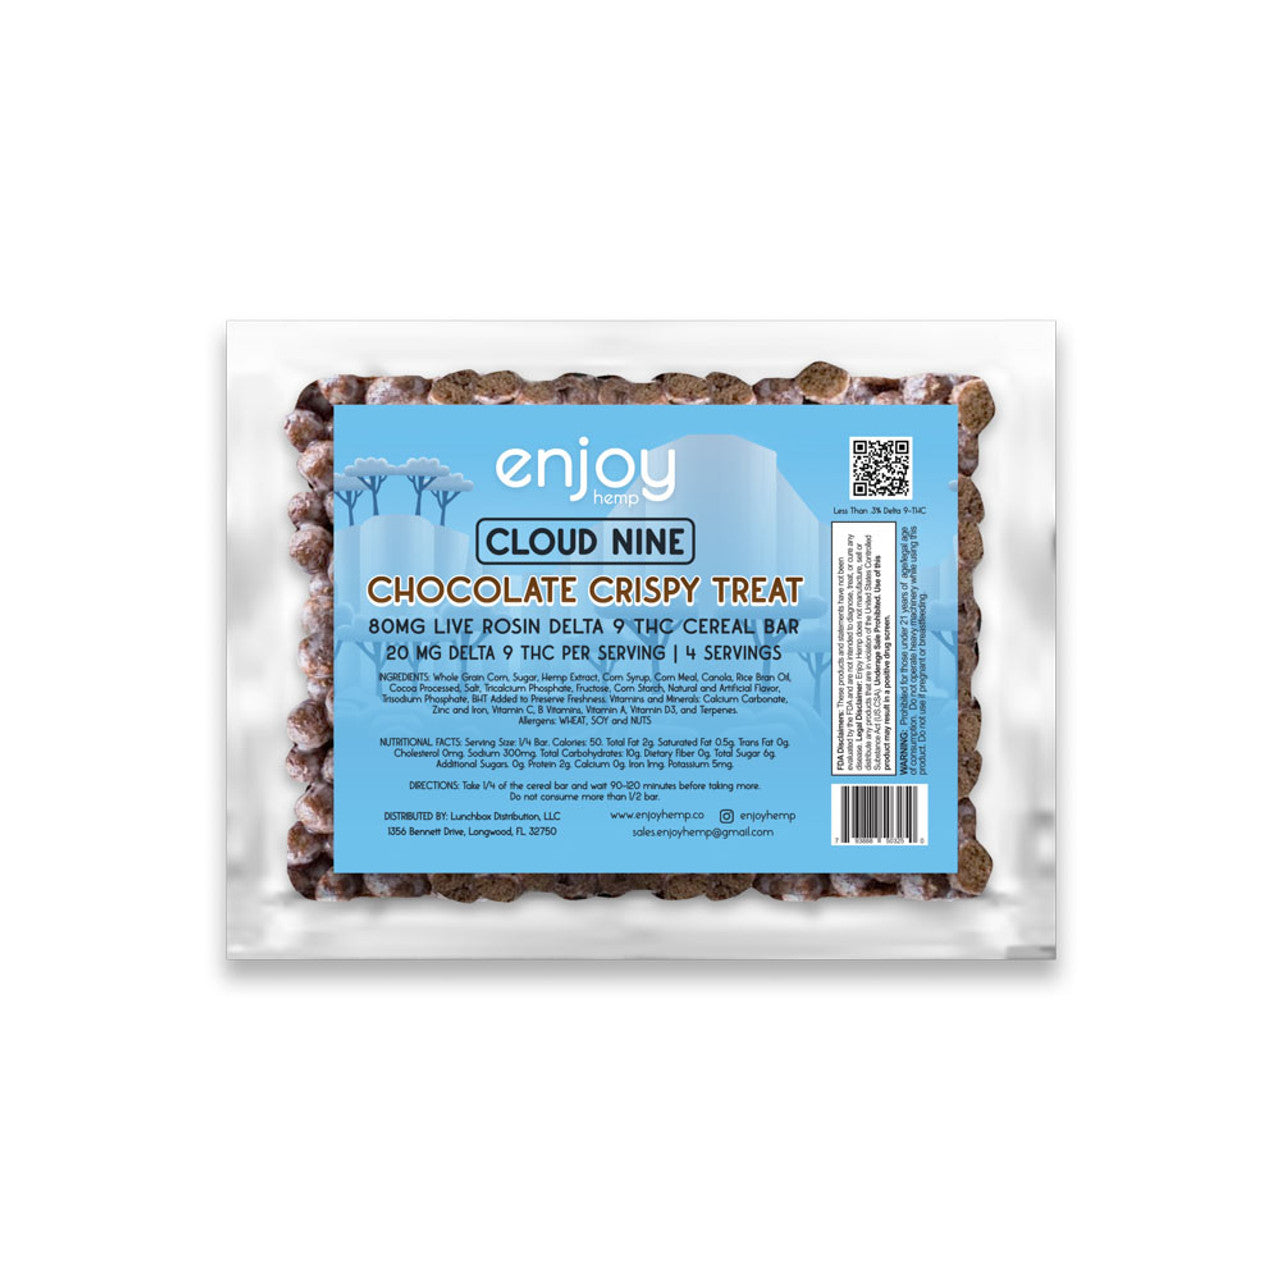 Enjoy Hemp Live Rosin Delta 9 THC Chocolate Cereal Bar - Cloud Nine Hybrid Best Price